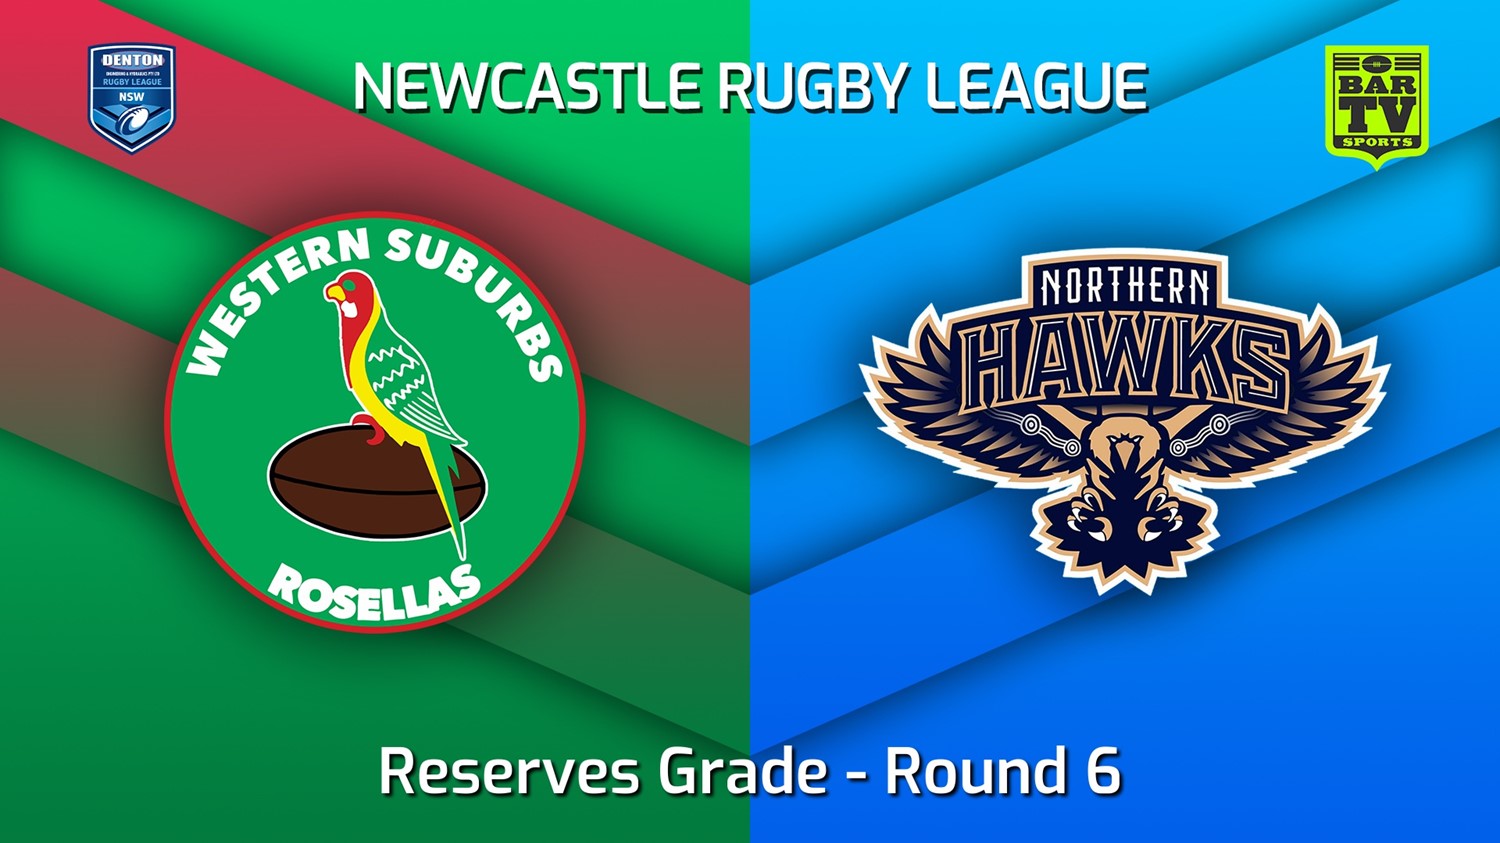 220430-Newcastle Round 6 - Reserves Grade - Western Suburbs Rosellas v Northern Hawks Slate Image